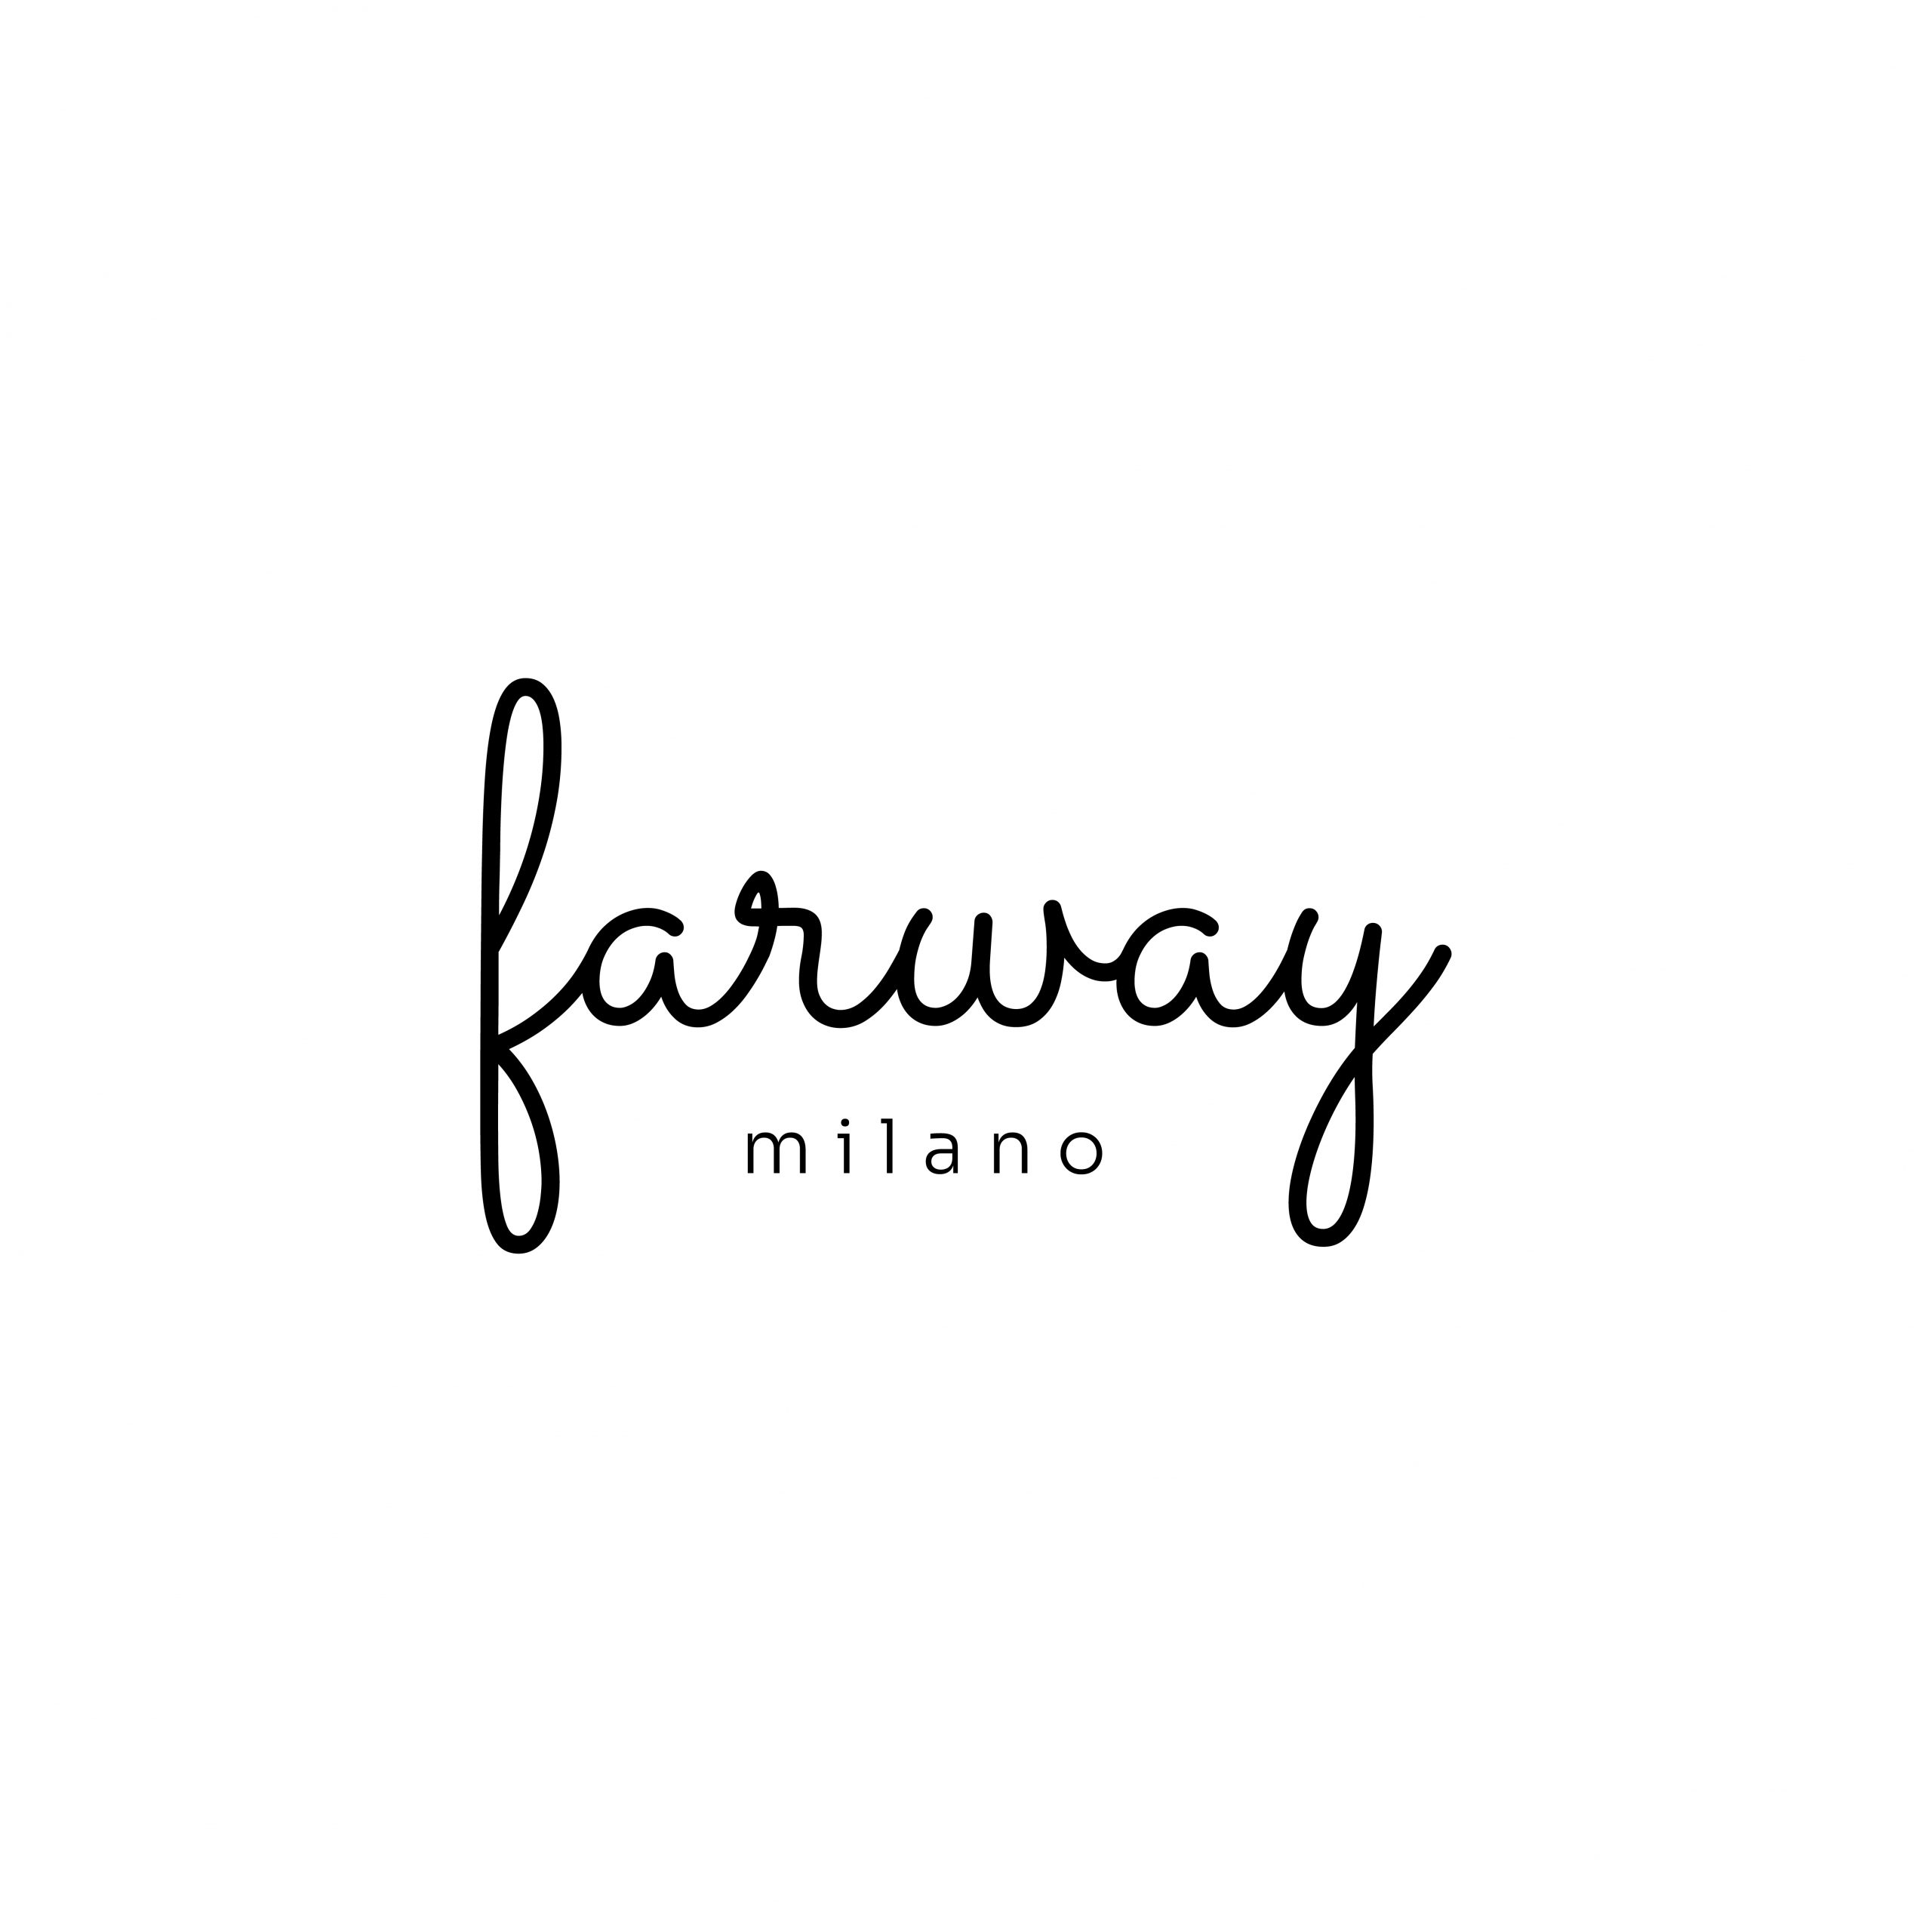 Farway